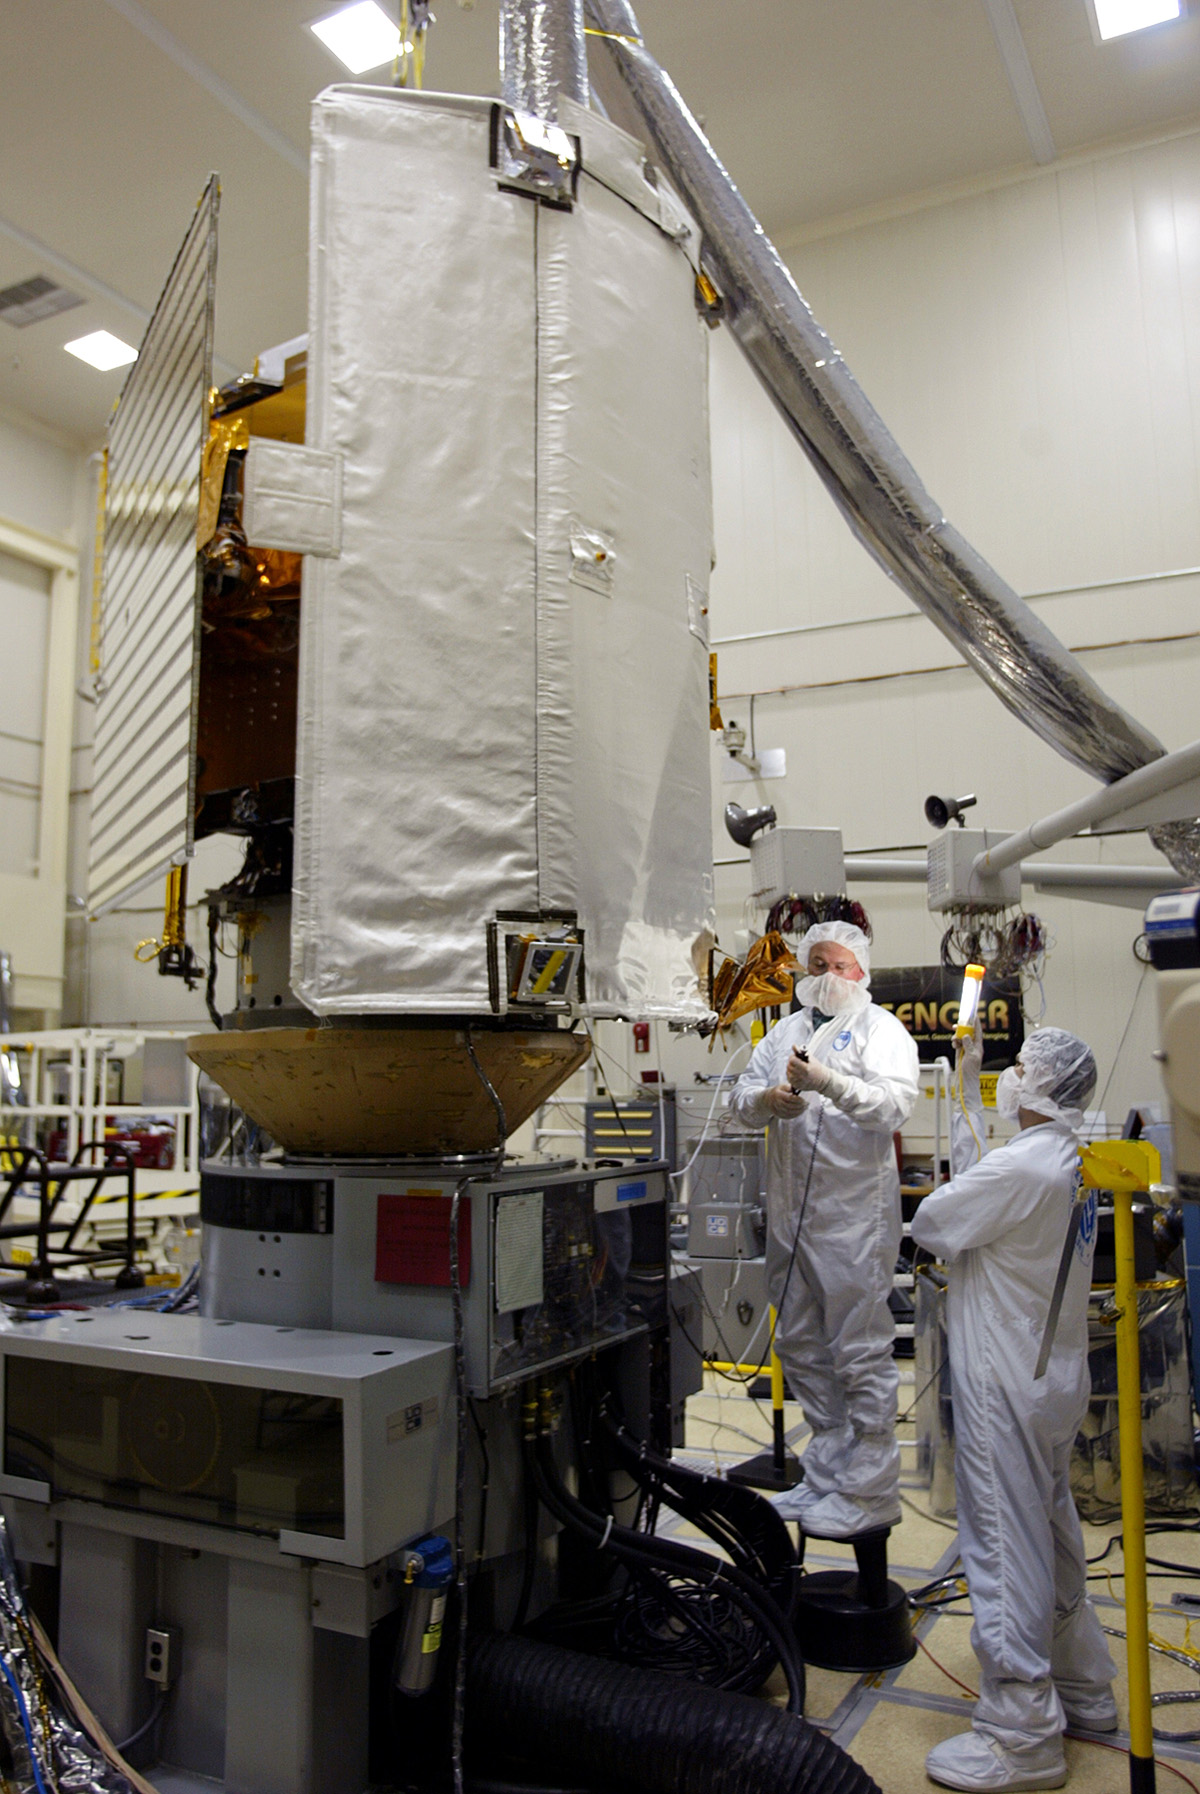 MESSENGER team members adjust the Mercury-bound spacecraft's ceramic-fabric sunshade